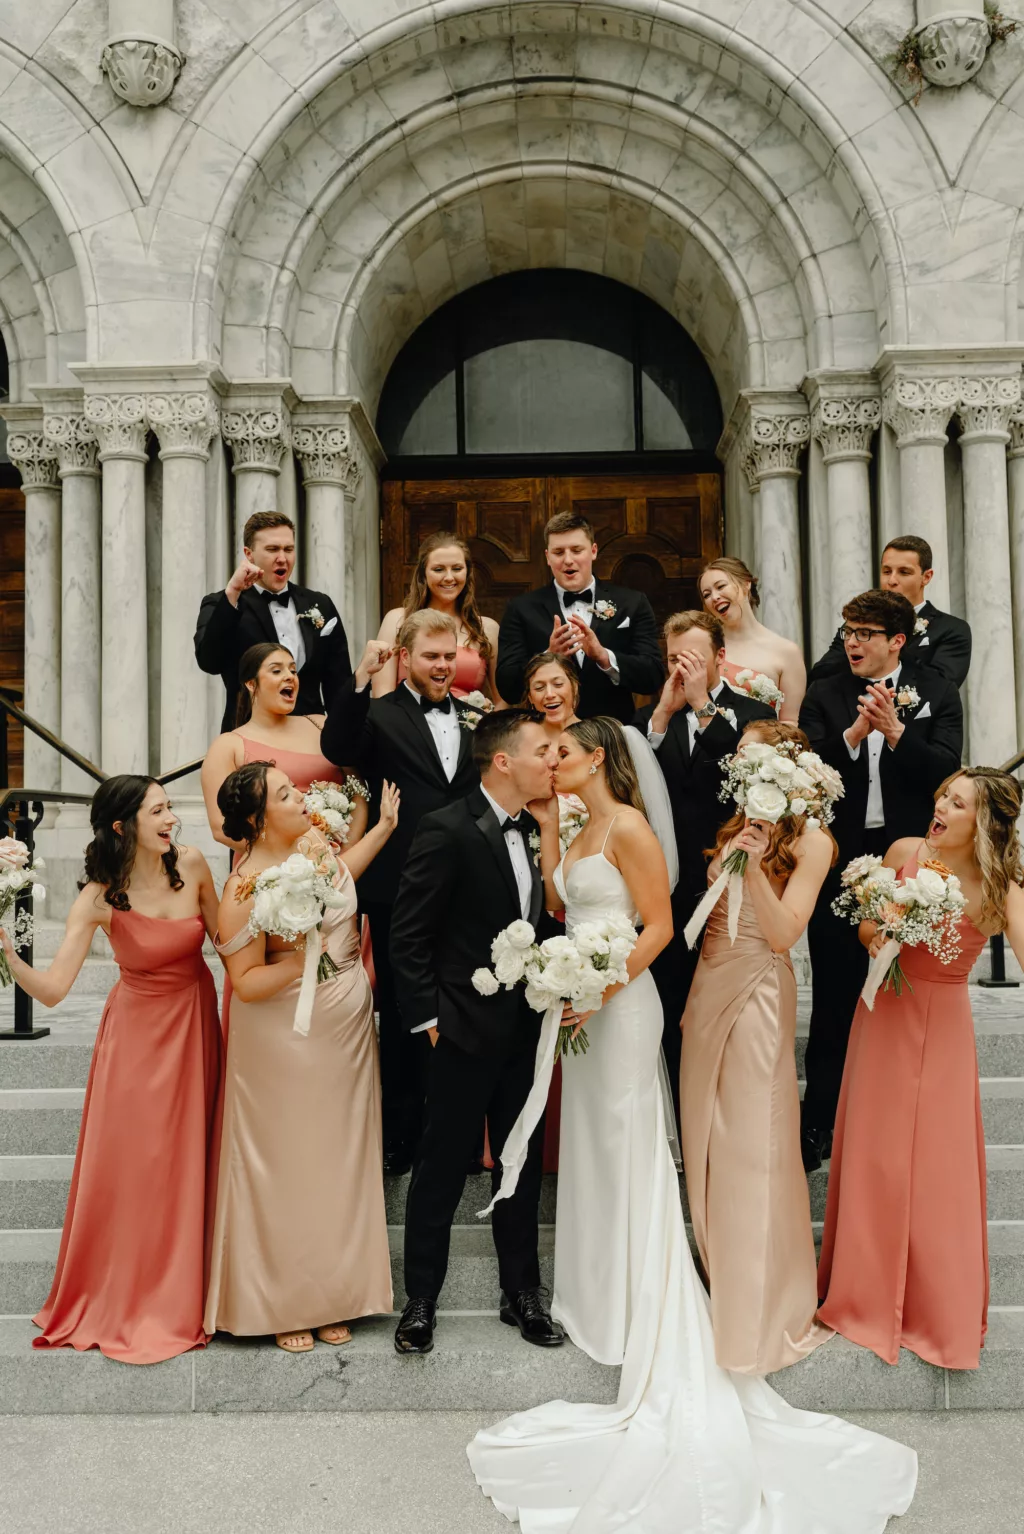 Matching Pink and Champagne Chiffon Bridesmaids Dress Ideas | Black Tuxedo and Bowtie Wedding Party Attire Inspiration | Tampa Wedding Planner Coastal Coordinating | Photographer J&S Media